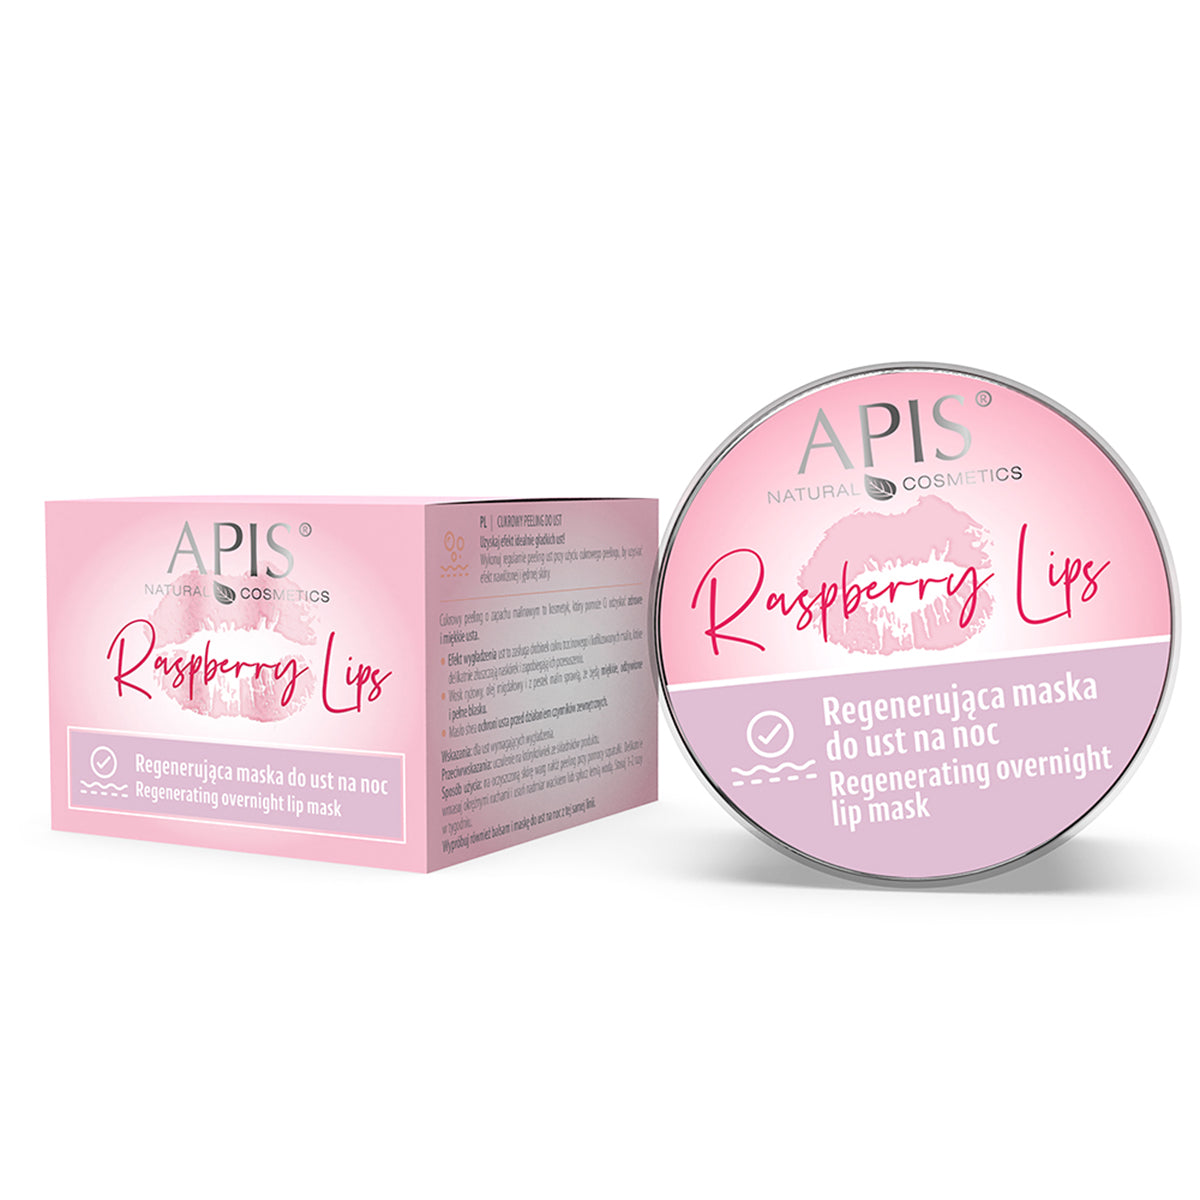 Apis raspberry lips regenerating night lip mask 10 ml